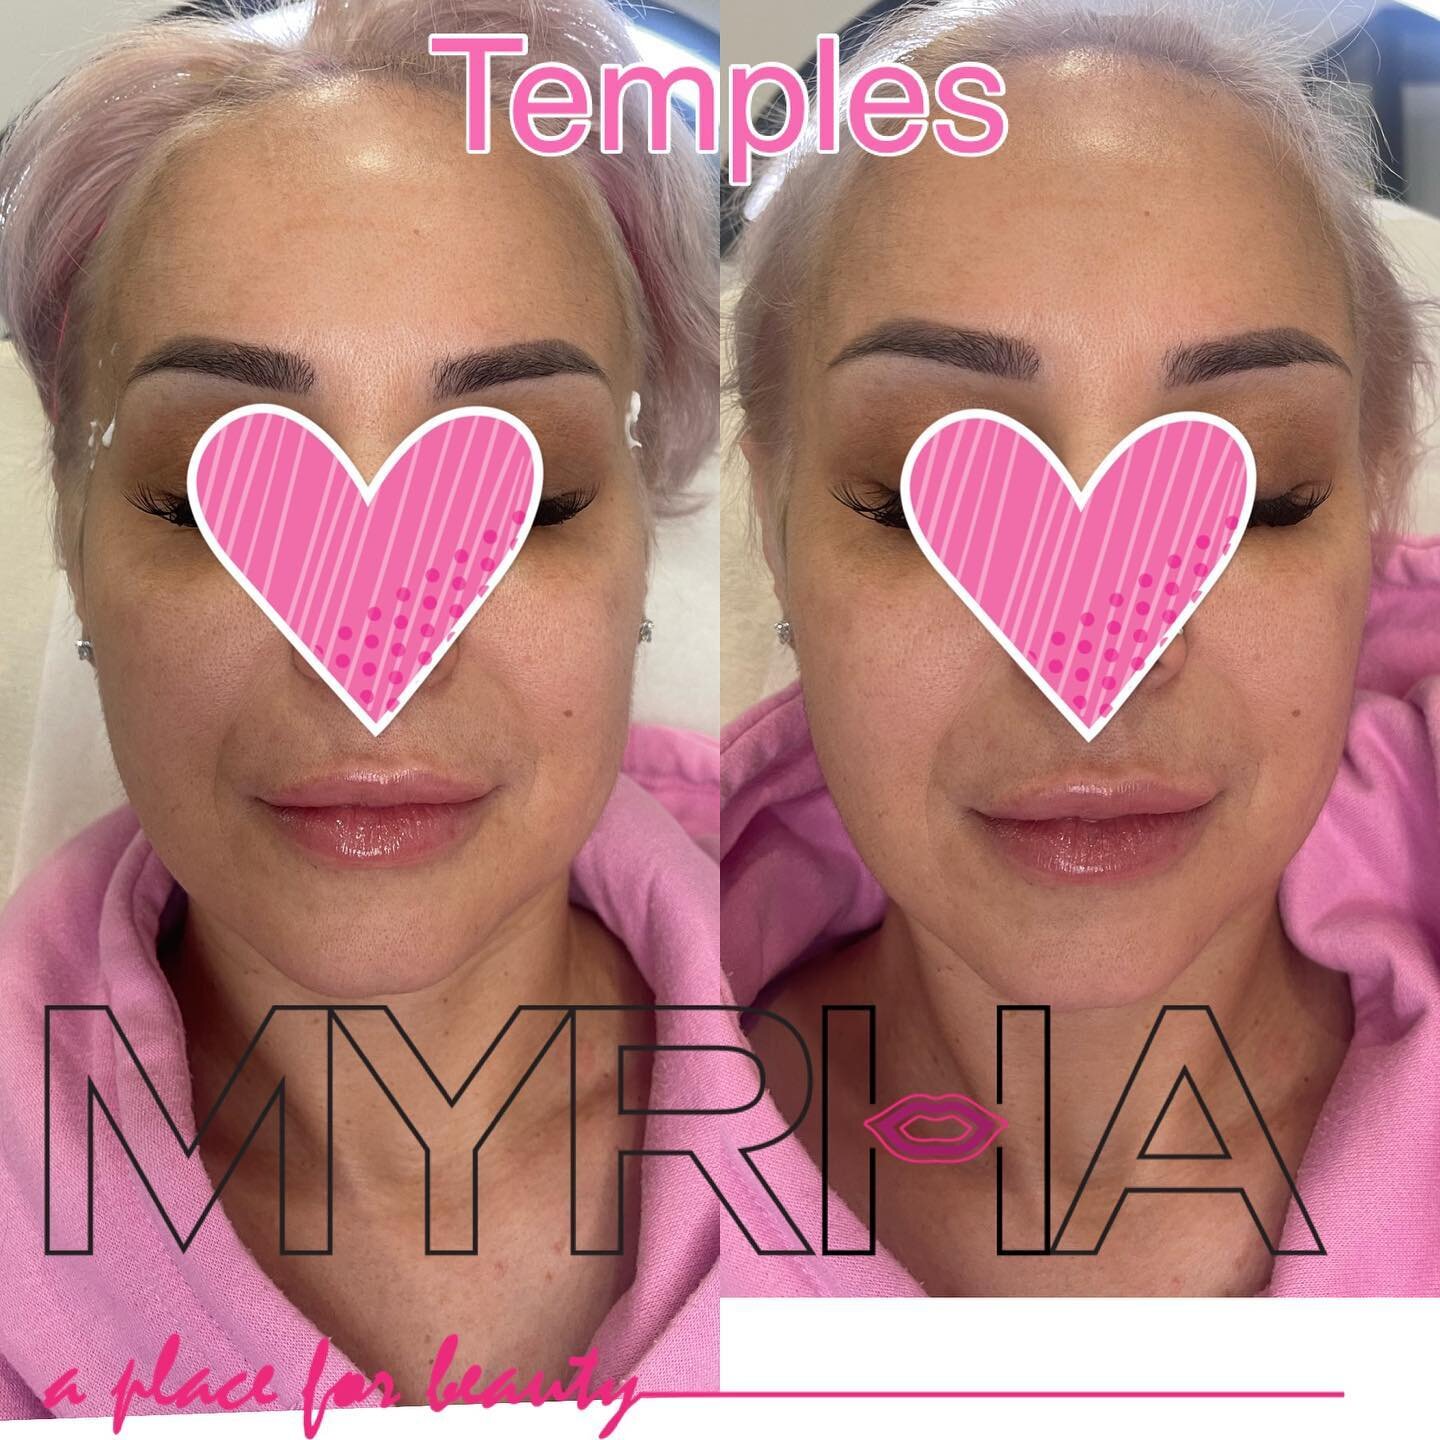 Temples makes such difference. 
⠀
🅜🅨 🅦🅞🅡🅚 #6ixlips #myrhalips
𝙁𝙤𝙧 𝙋𝙧𝙤𝙛𝙚𝙨𝙨𝙞𝙤𝙣𝙖𝙡 𝙥𝙖𝙜𝙚, 𝙫𝙞𝙨𝙞𝙩:
𝗙𝗔𝗖𝗘 𝗪𝗢𝗥𝗞&nbsp;&nbsp;&nbsp;@myrha_beauty
𝗟𝗜𝗣 𝗪𝗢𝗥𝗞 @6ix_lips
𝗠𝗜𝗡𝗜 𝗙𝗔𝗖𝗘 𝗟𝗜𝗙𝗧 @lifted_snatched
⠀
Teosyal